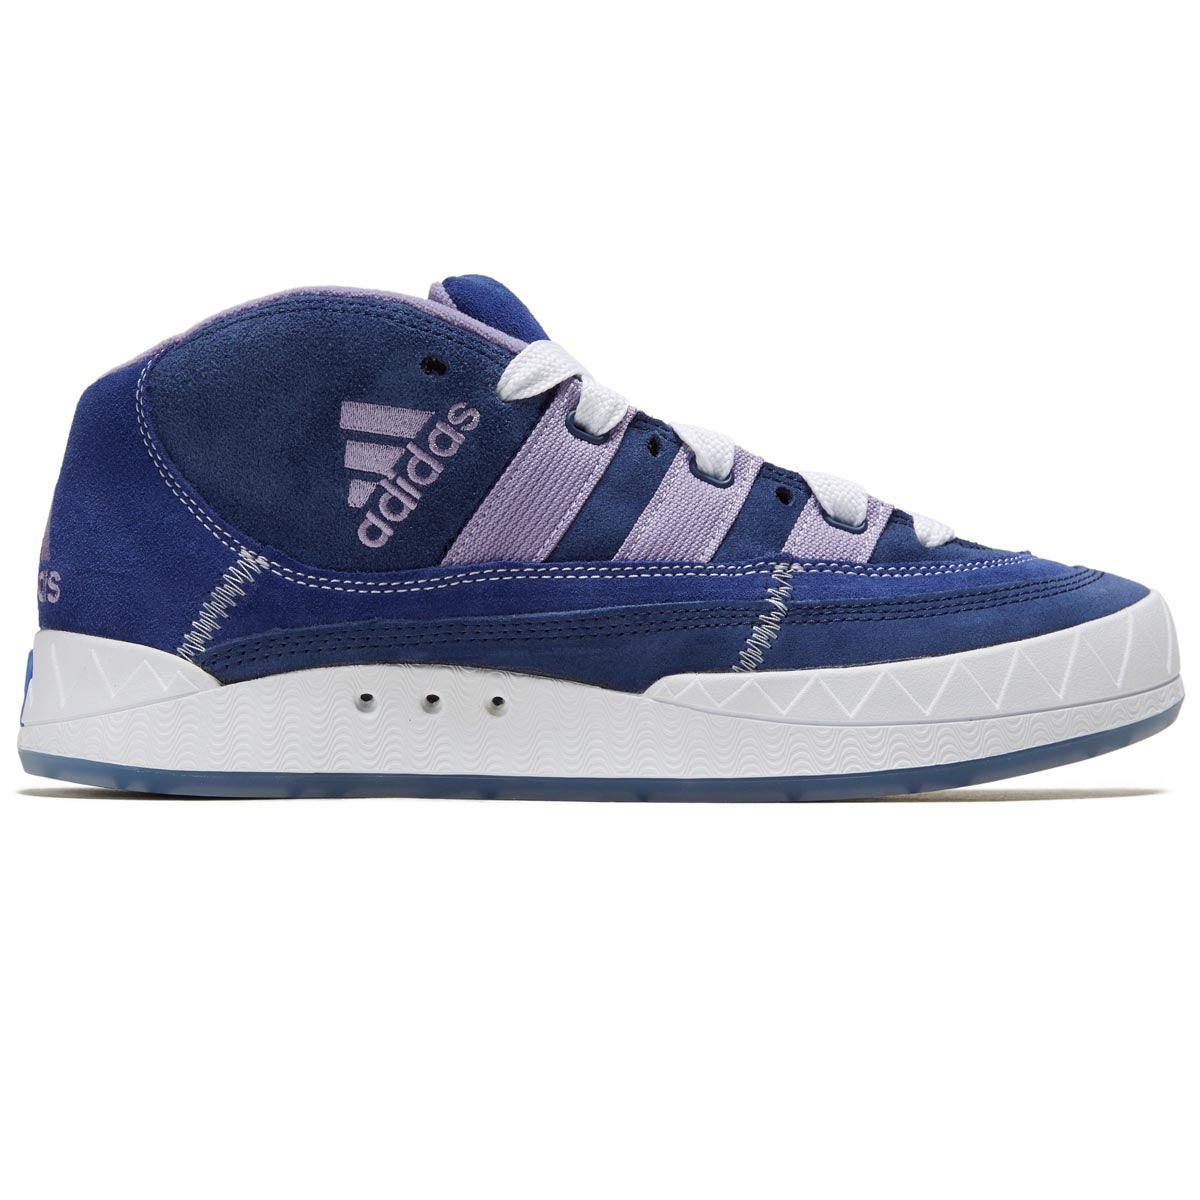 Adidas Adimatic Mid x Maite Shoes - Victory Blue/Magic Lilac/Dark Blue image 1